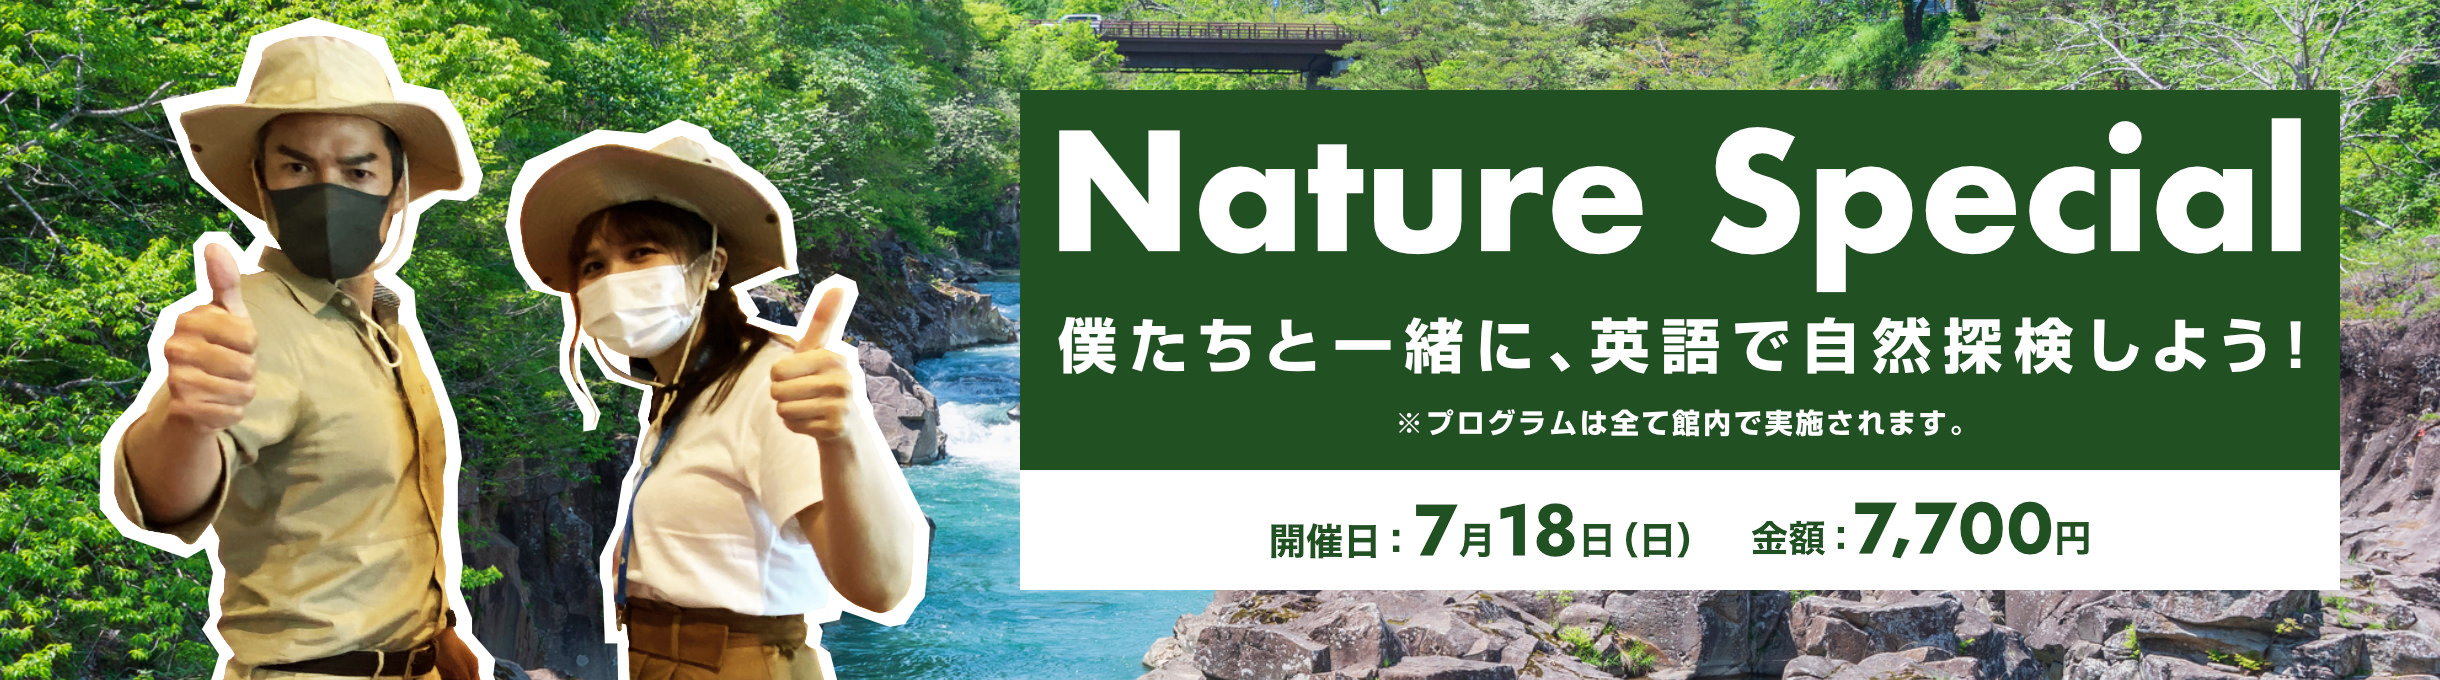 Nature Special 僕たちと一緒に、英語で自然探検しよう！ 7月18日(日) 7,700円(税込)